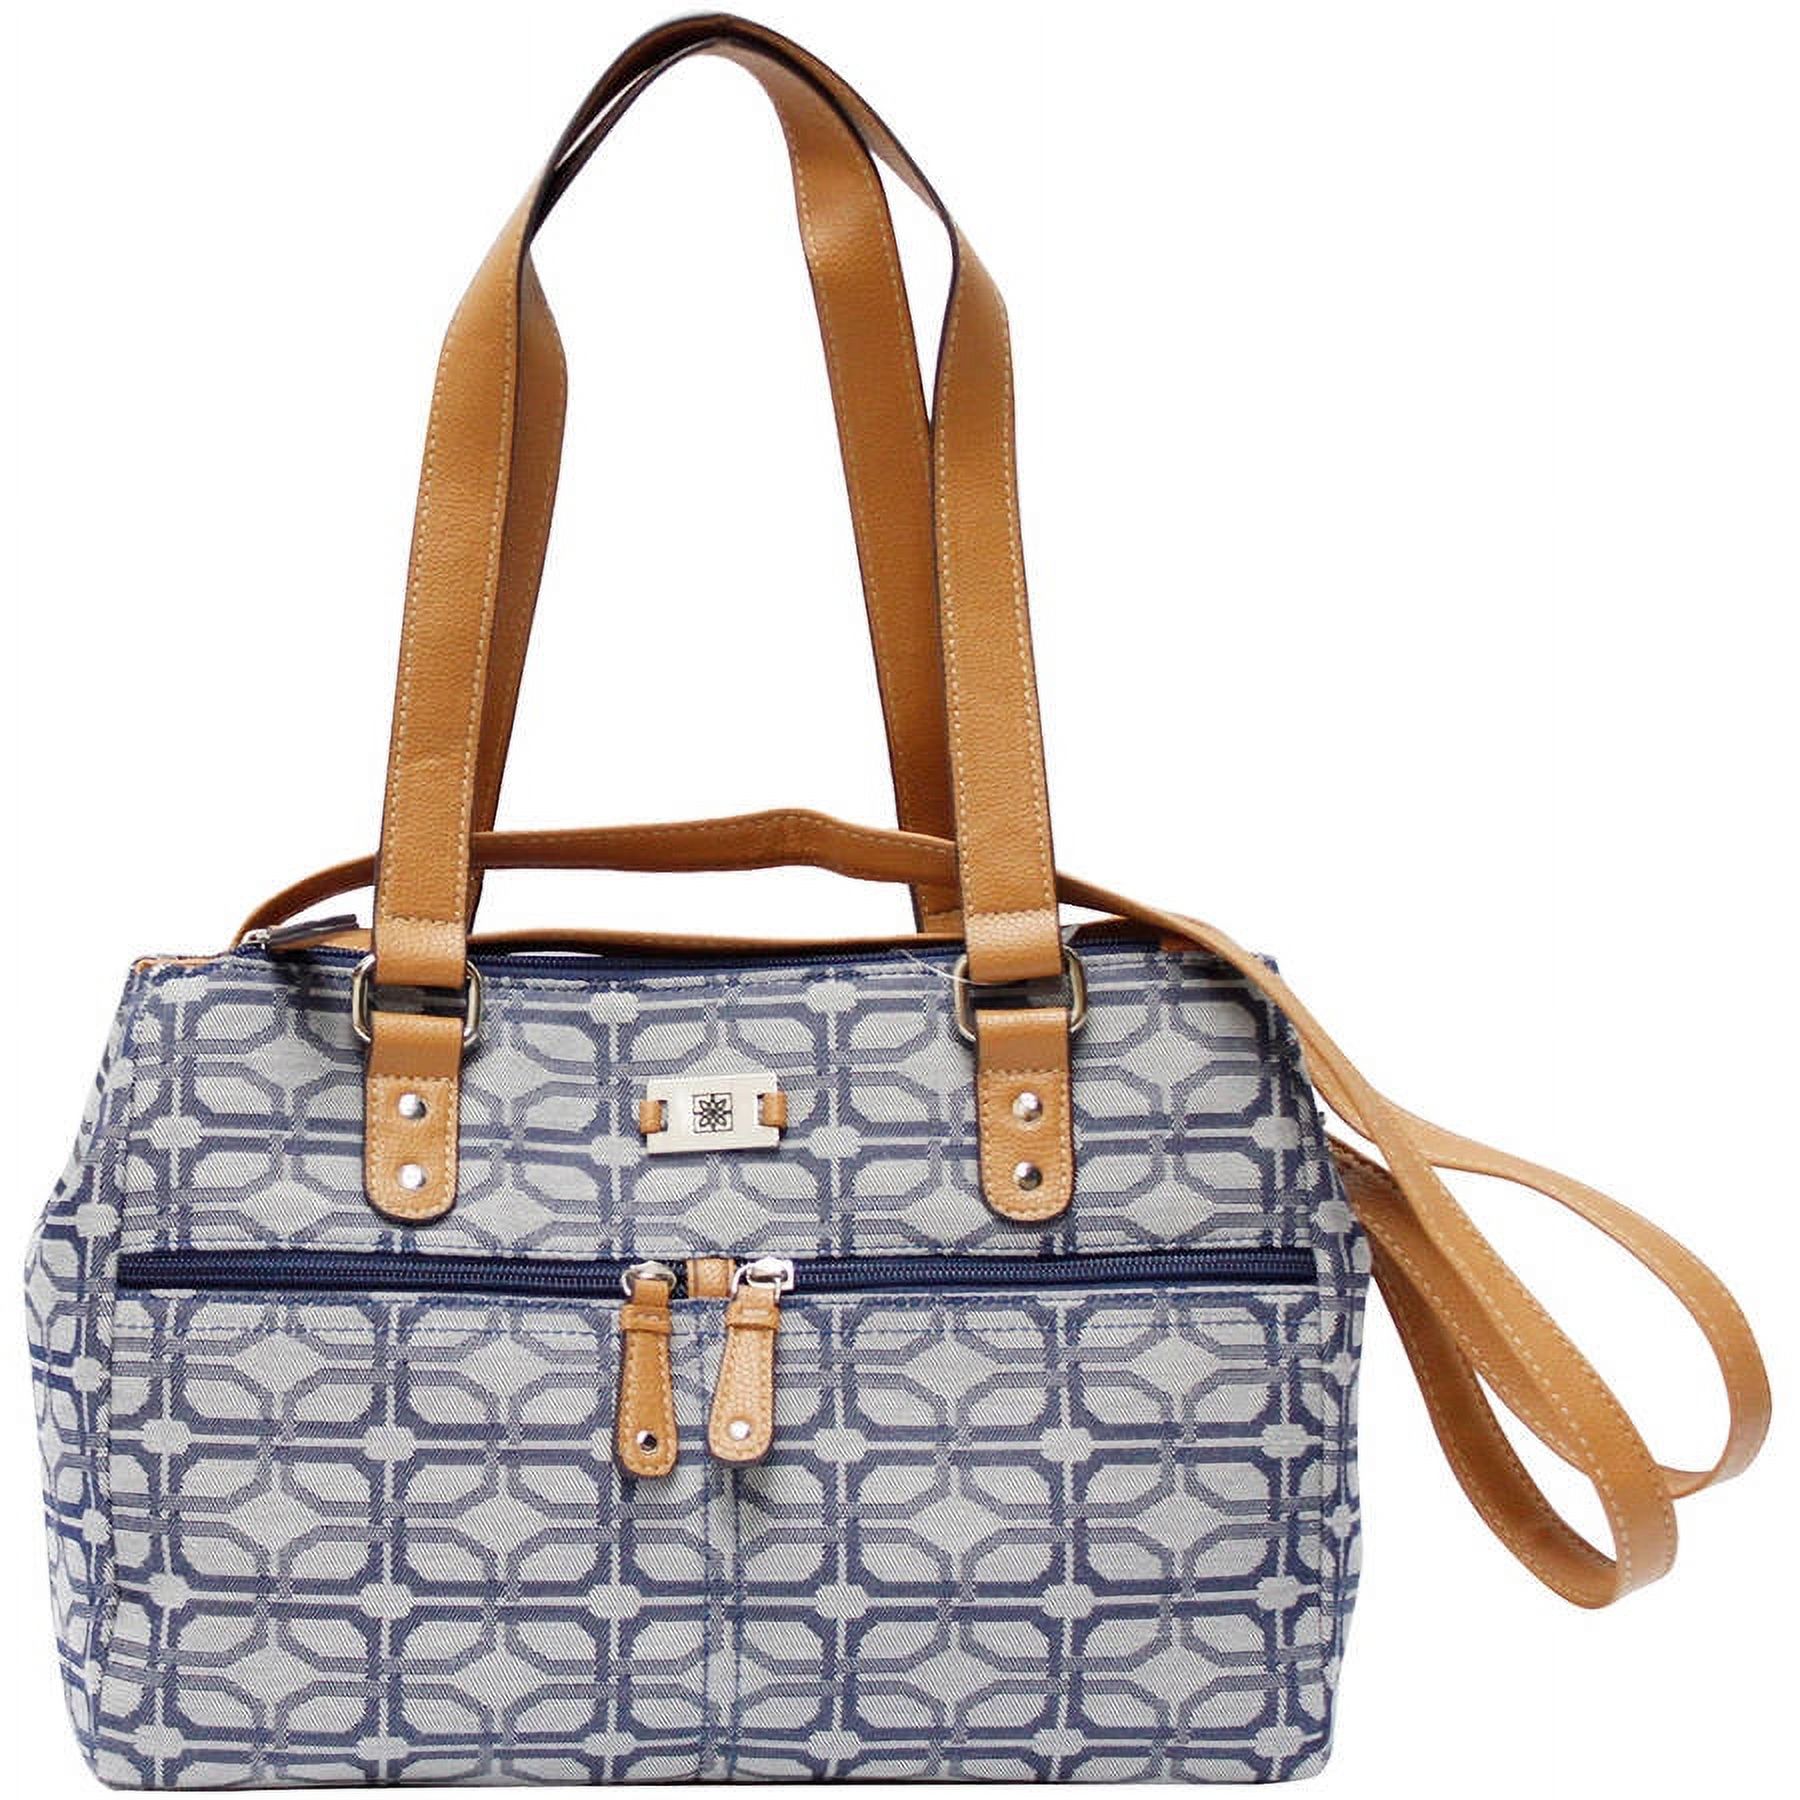 Women's Jacquard Satchel Handbag - image 1 of 3